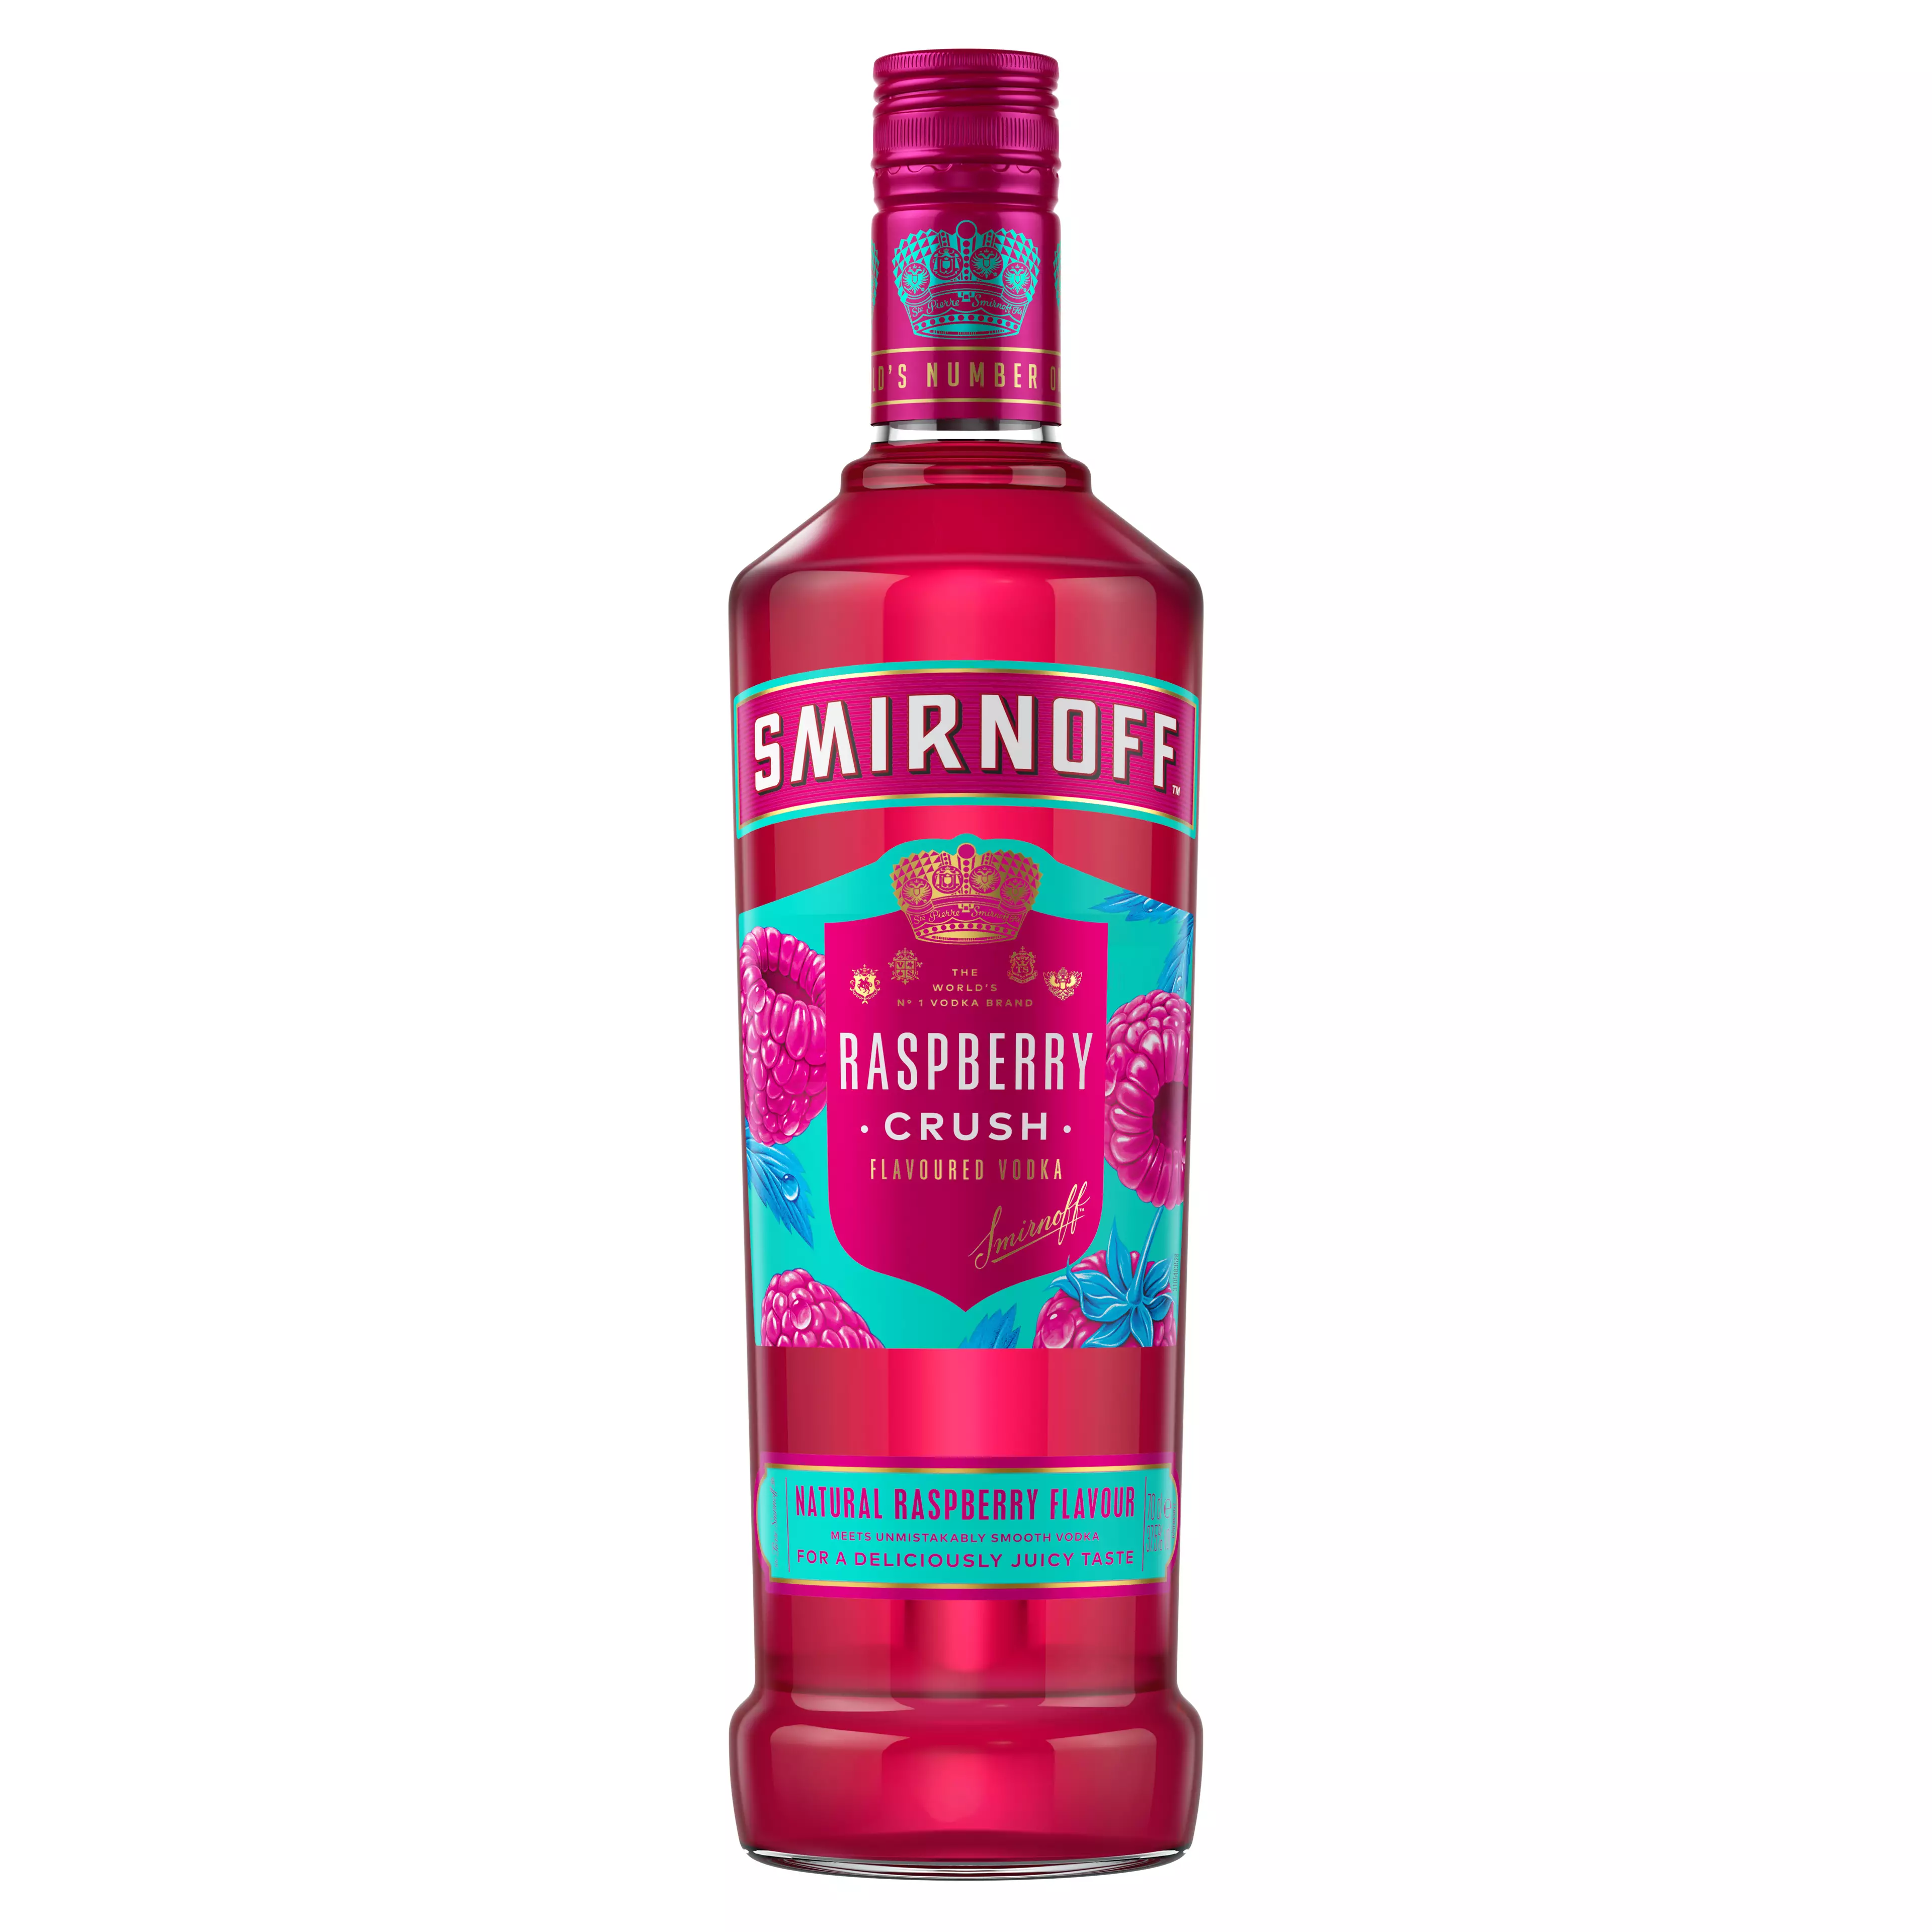 Smirnoff is selling raspberry flavoured vodka (